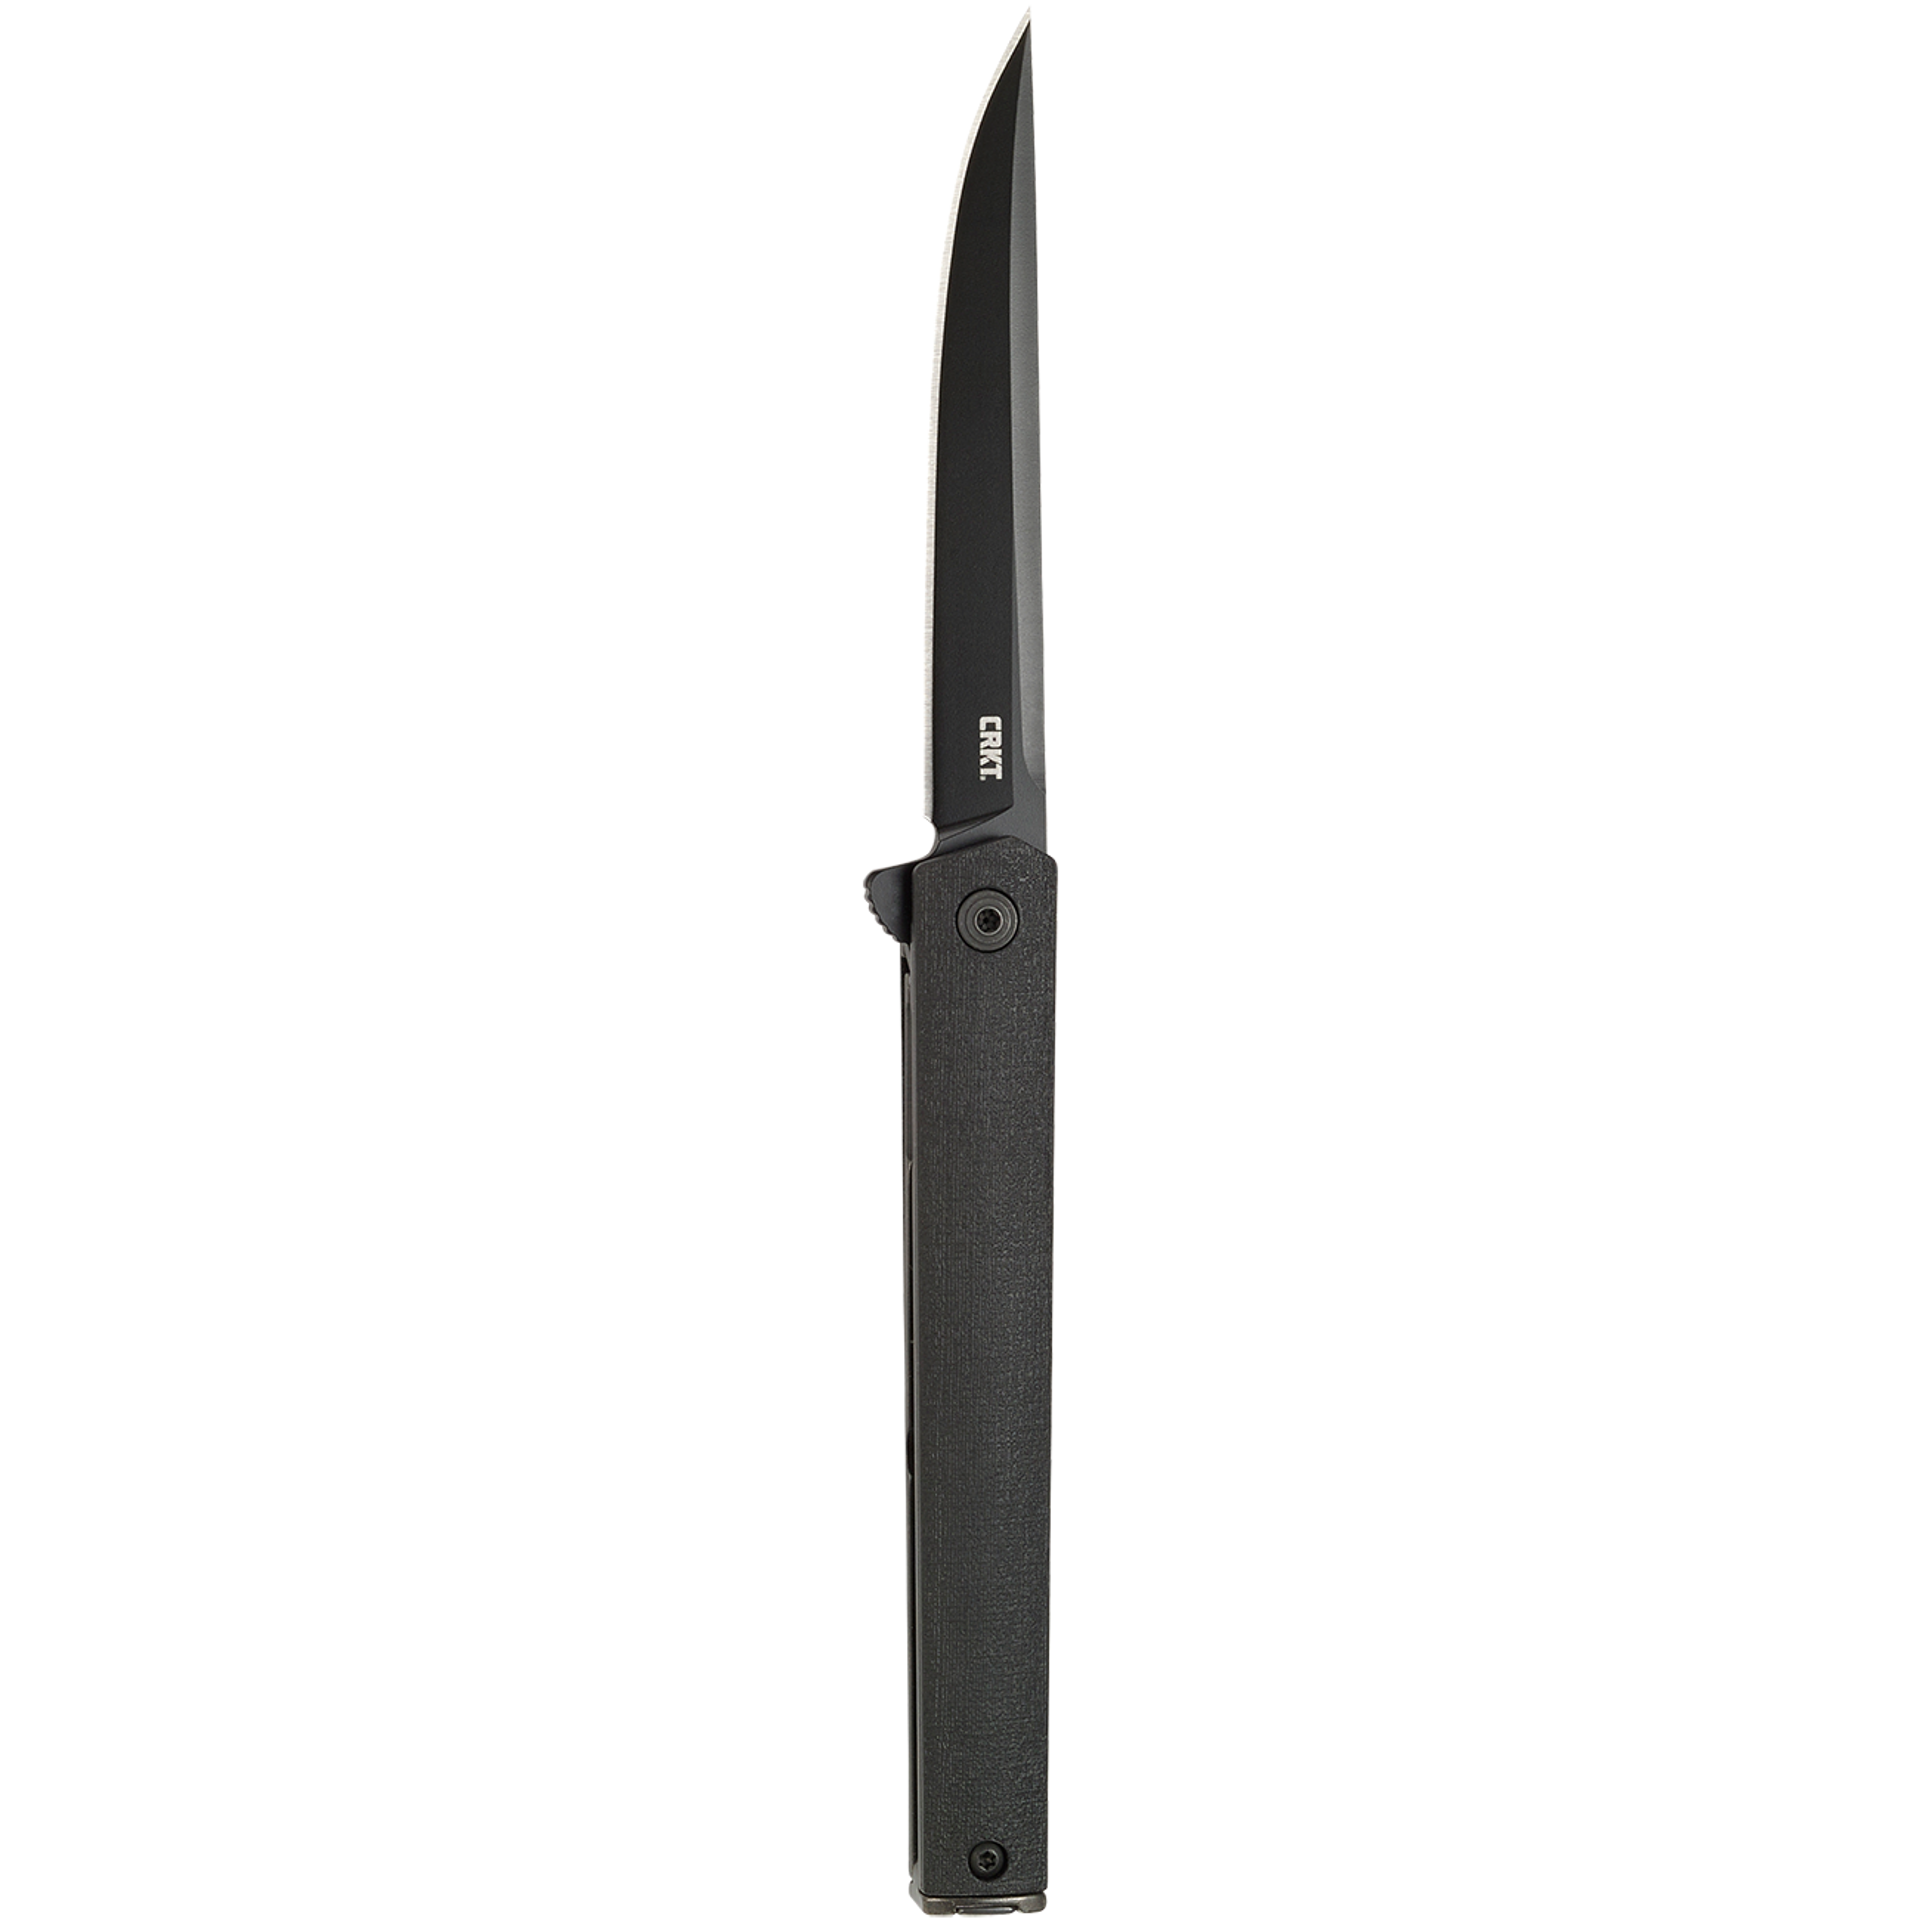 CEO Flipper pocket knife